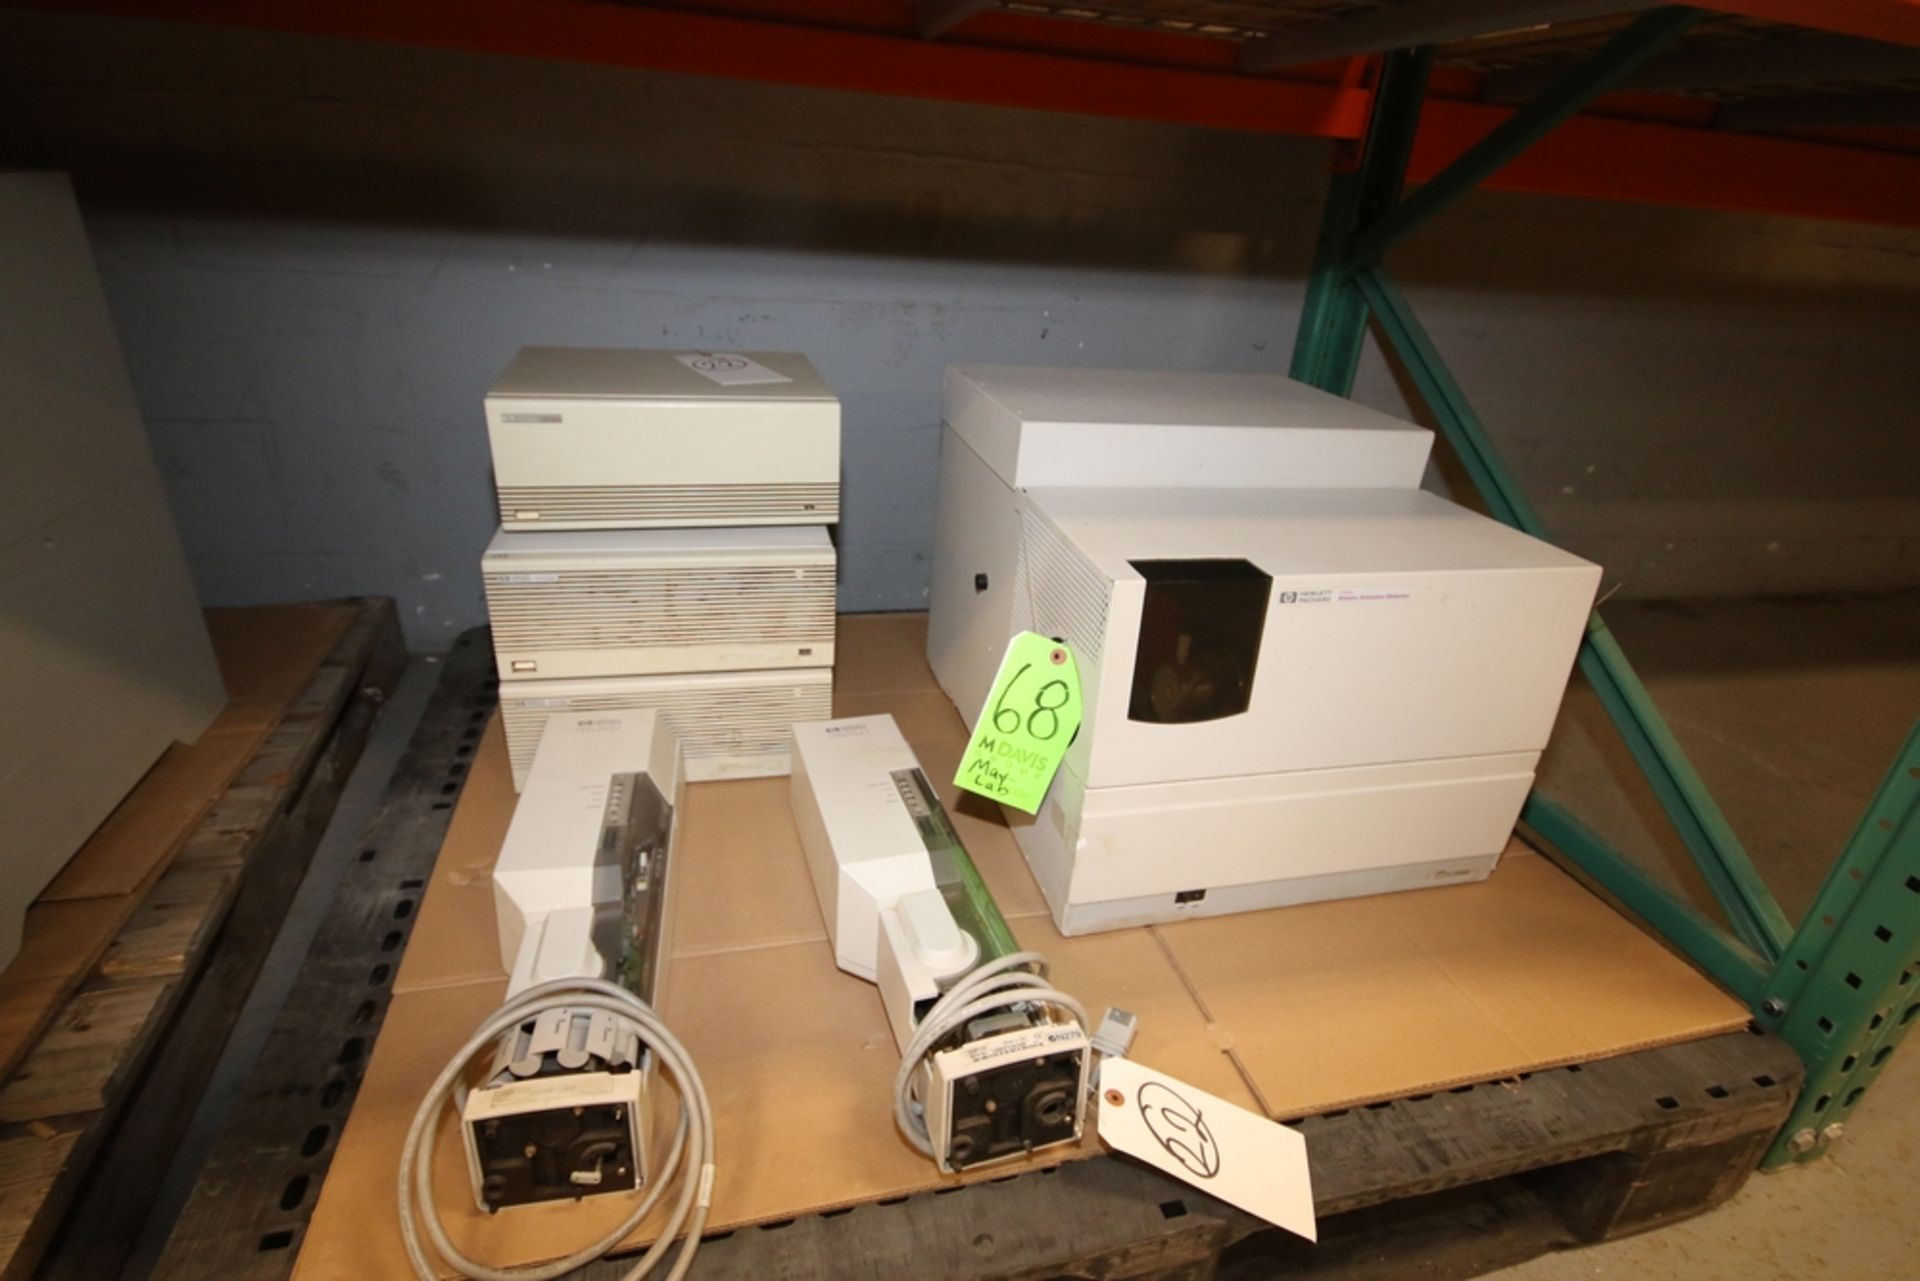 Hewlett Packard Atomic Emission Detector, M/N G2350A, S/N US03000359, with (2) Hewlett Packard